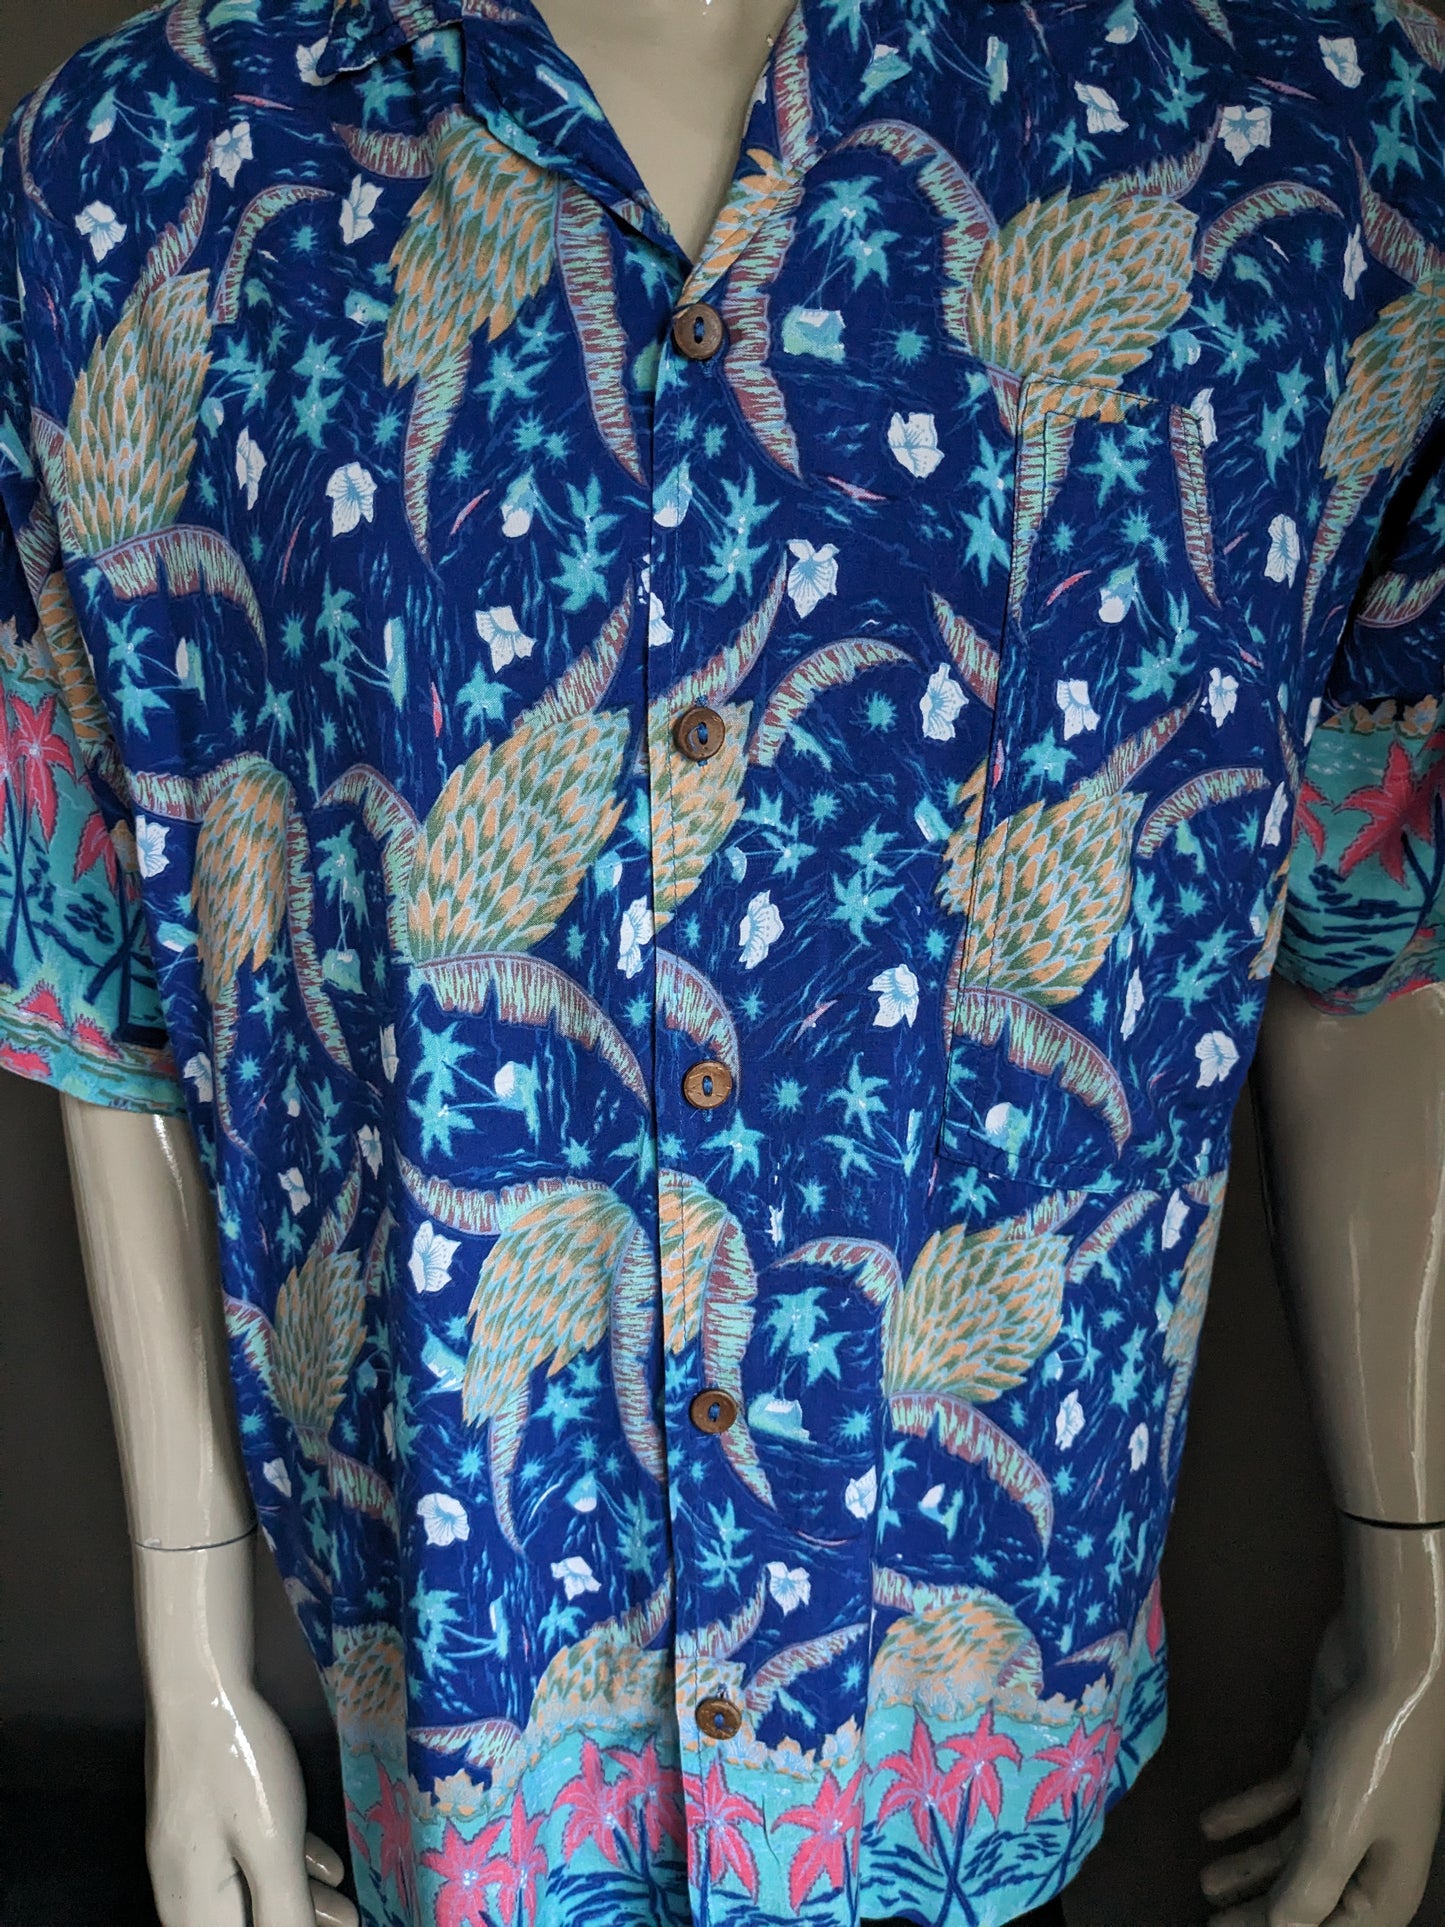 Rainbow Jo Maui origineel Hawaii overhemd korte mouw. Blauw oranje roze groene print. Maat XL.